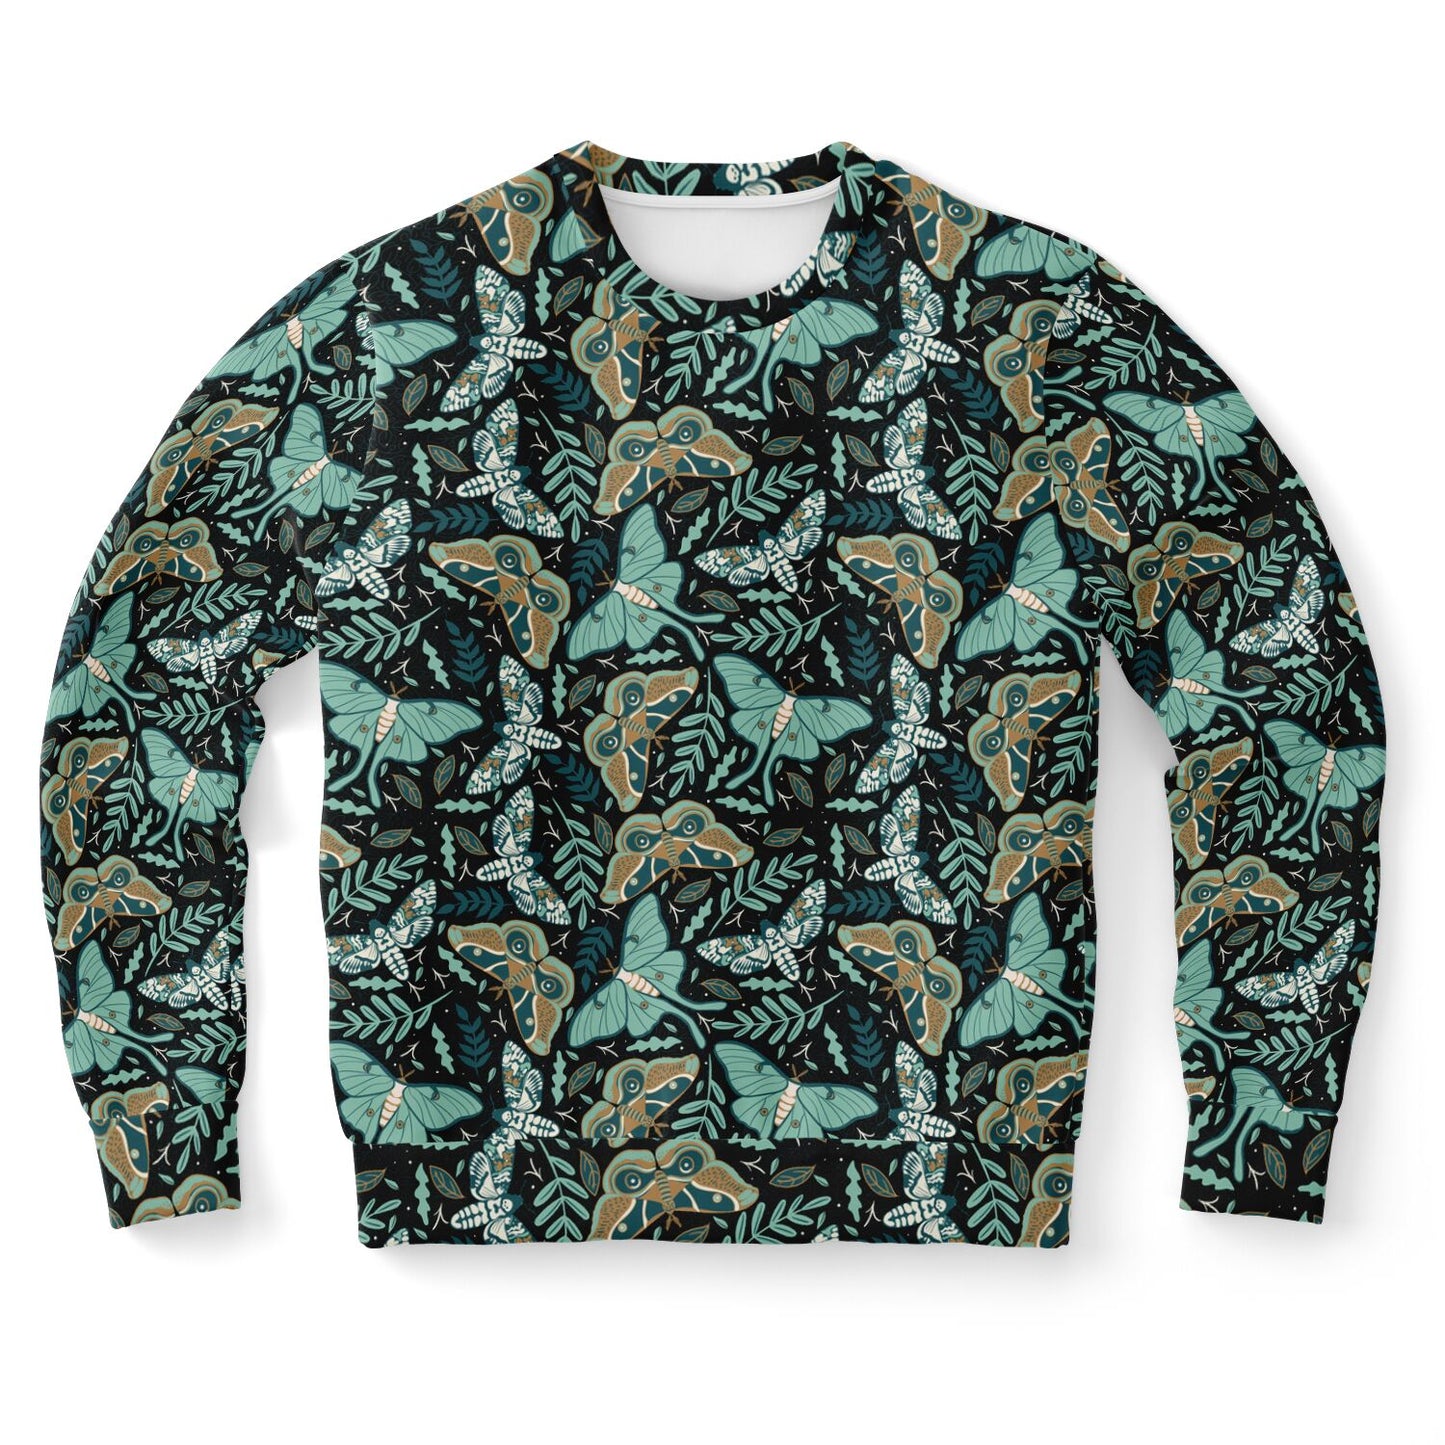 Cottage-core butterflies sweatshirt